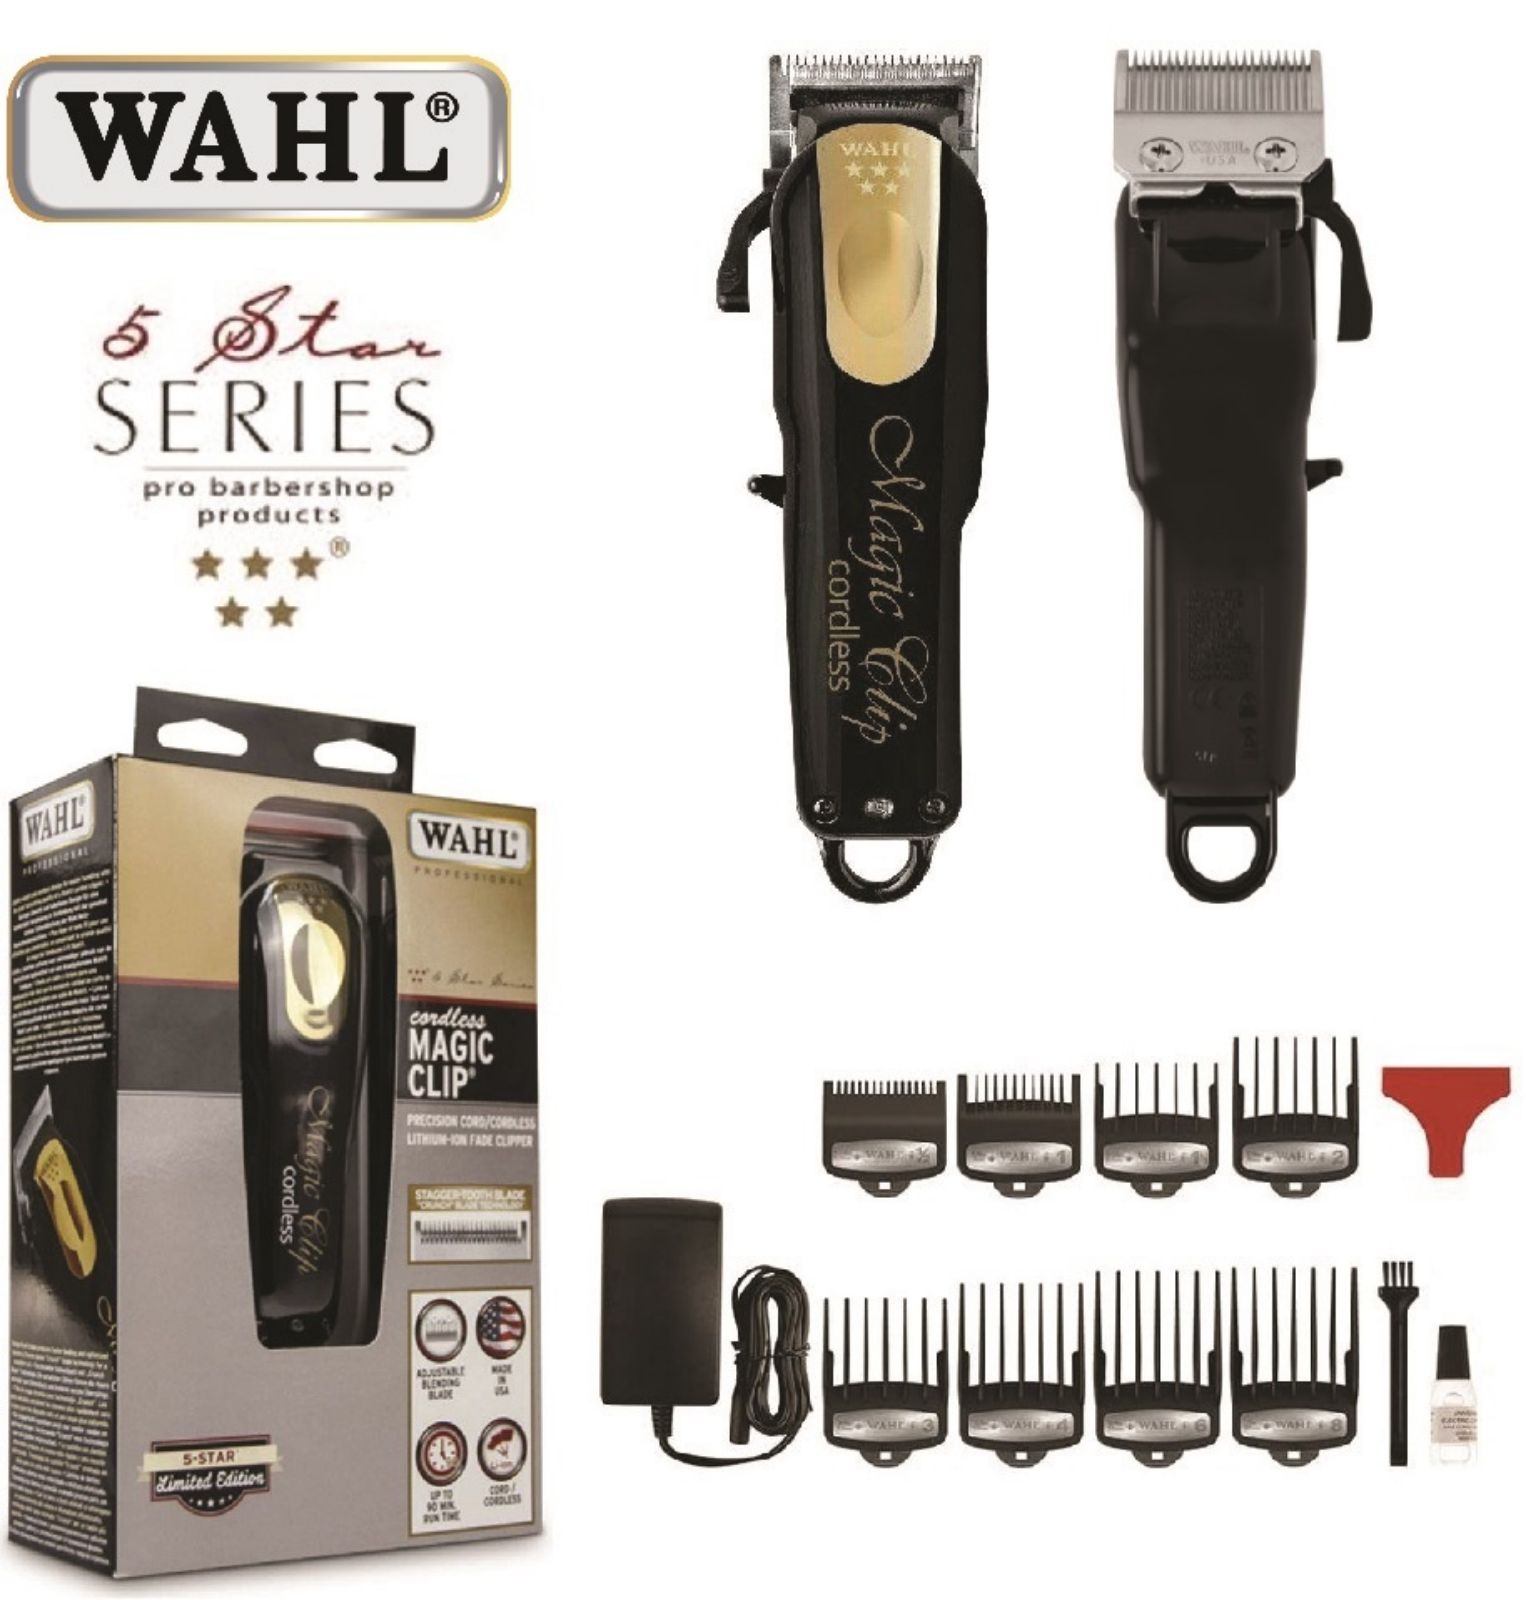 wahl magic clip cordless accessories